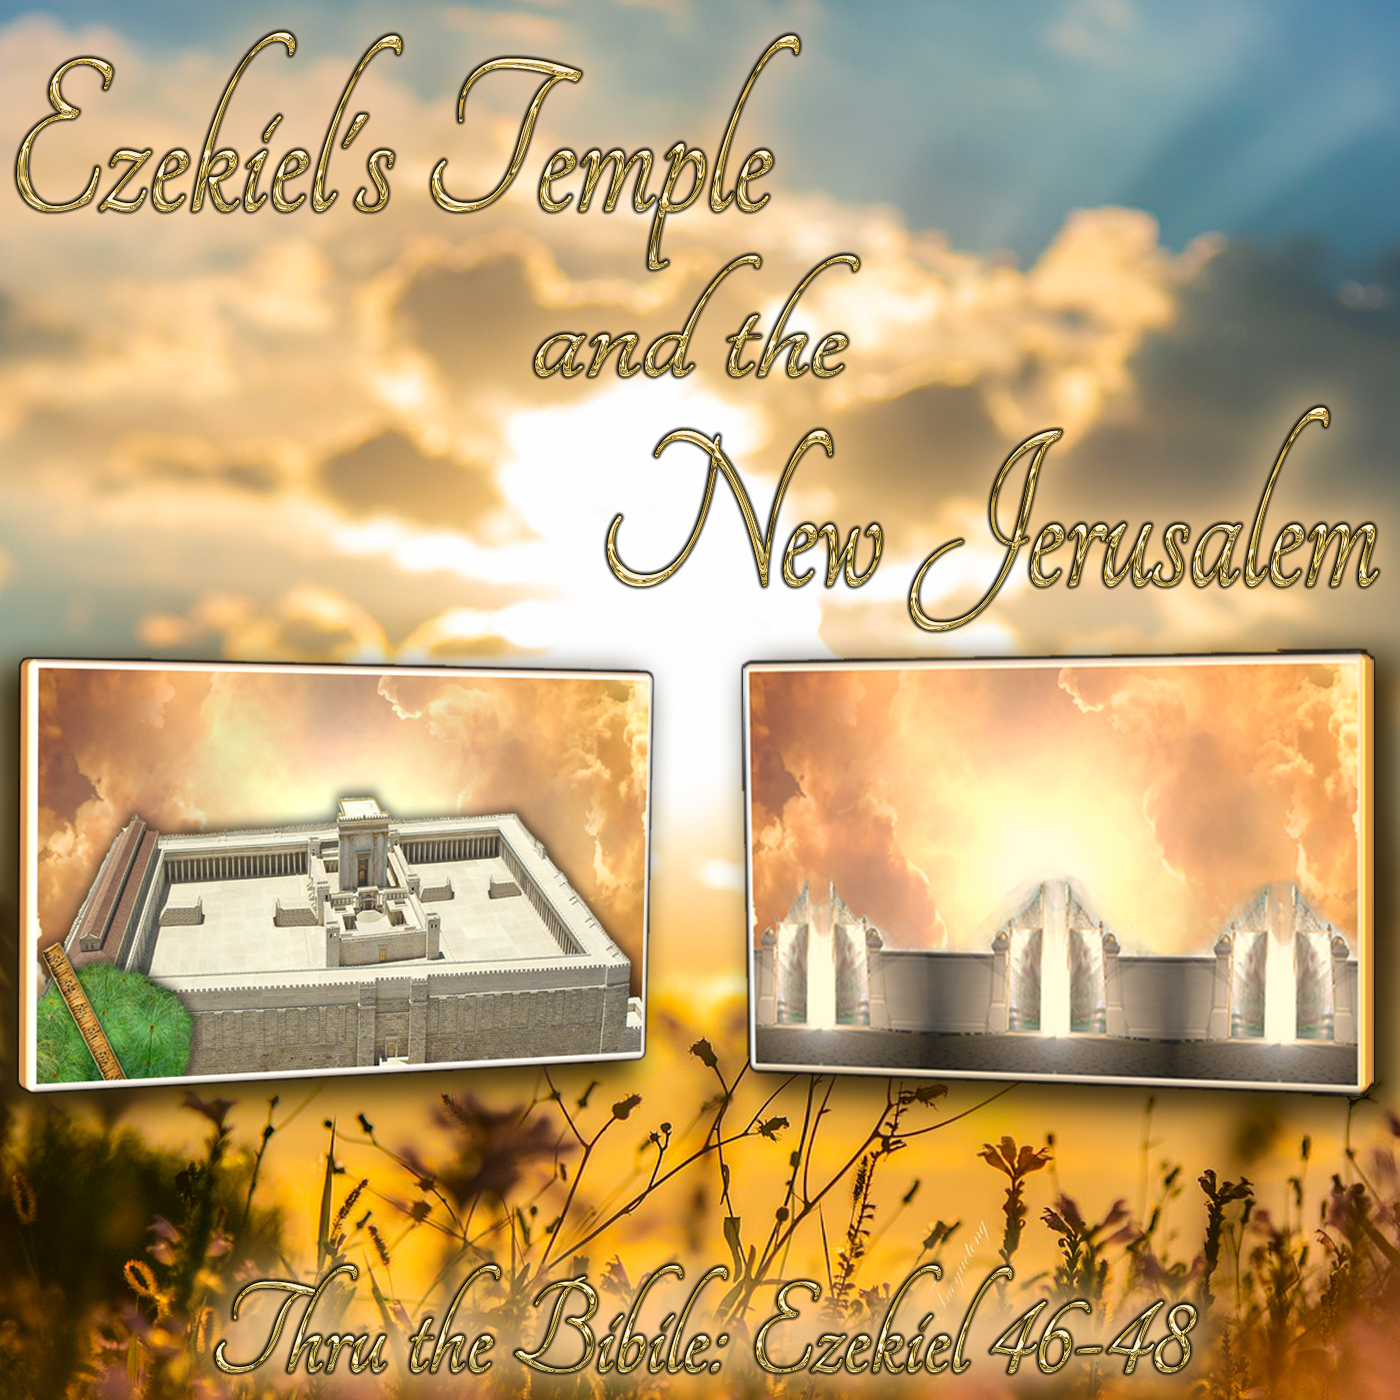 Ezekiel's Temple & the New Jerusalem - Living Grace Fellowship